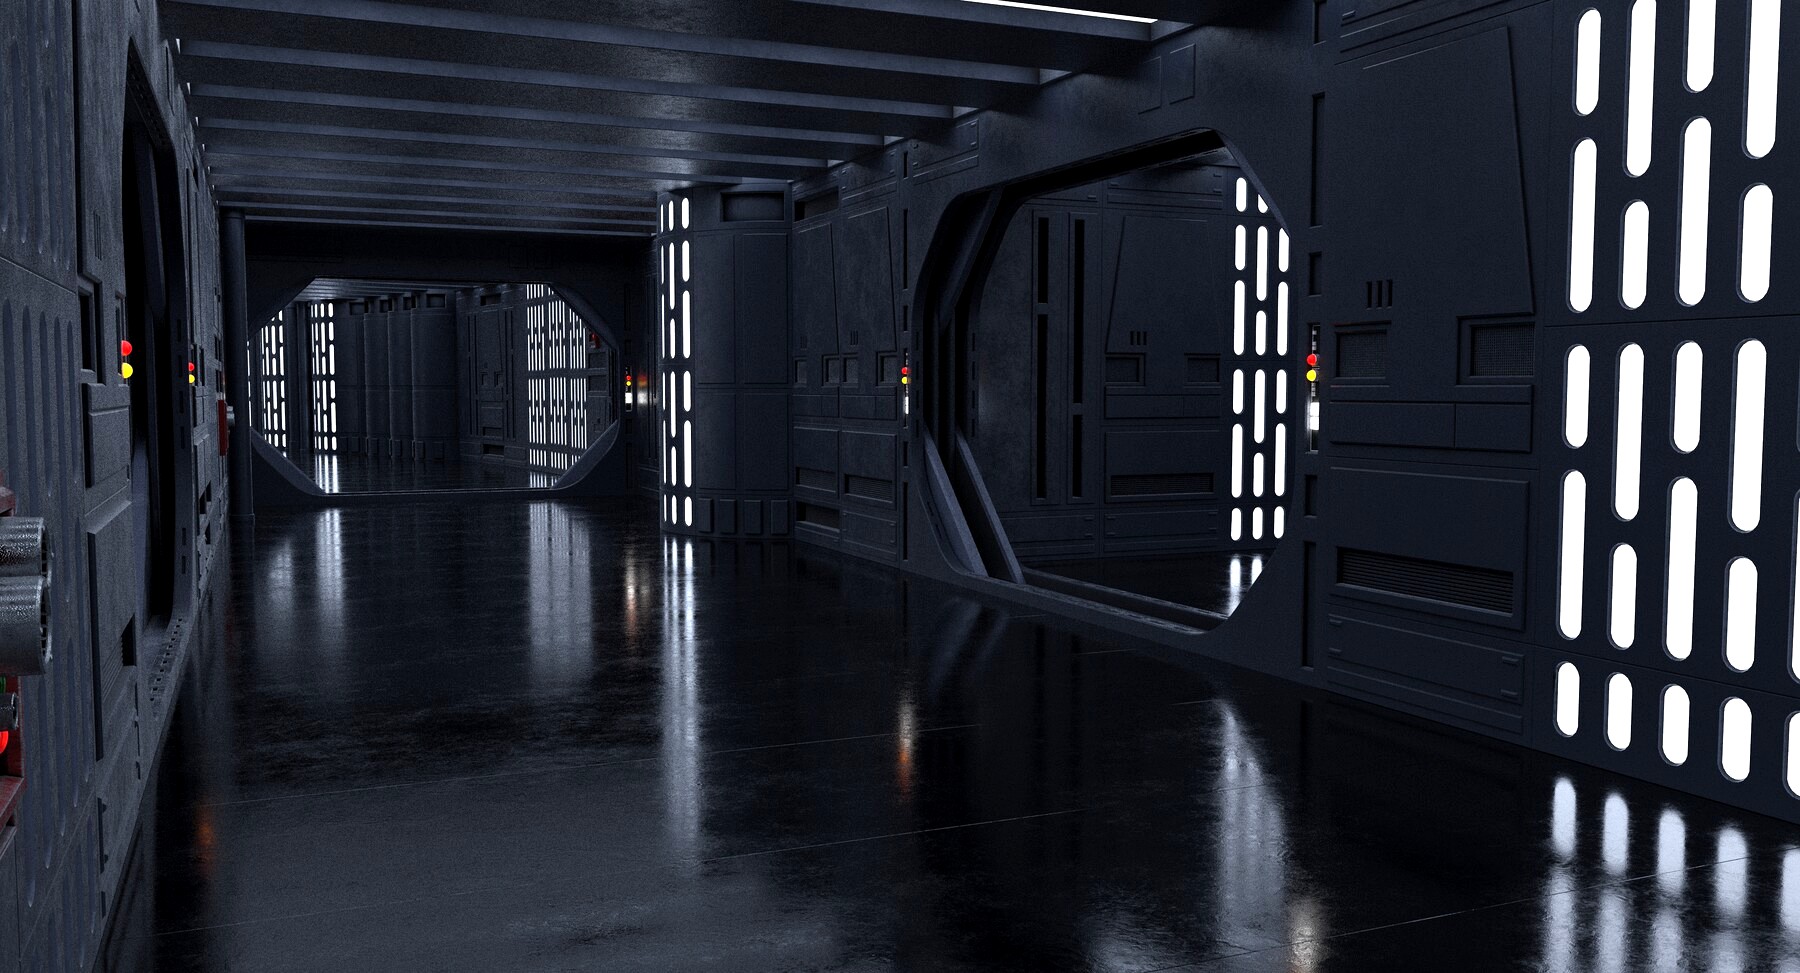 Dark Space Corridors - Sci-Fi Interior Environment 90 Piece Set